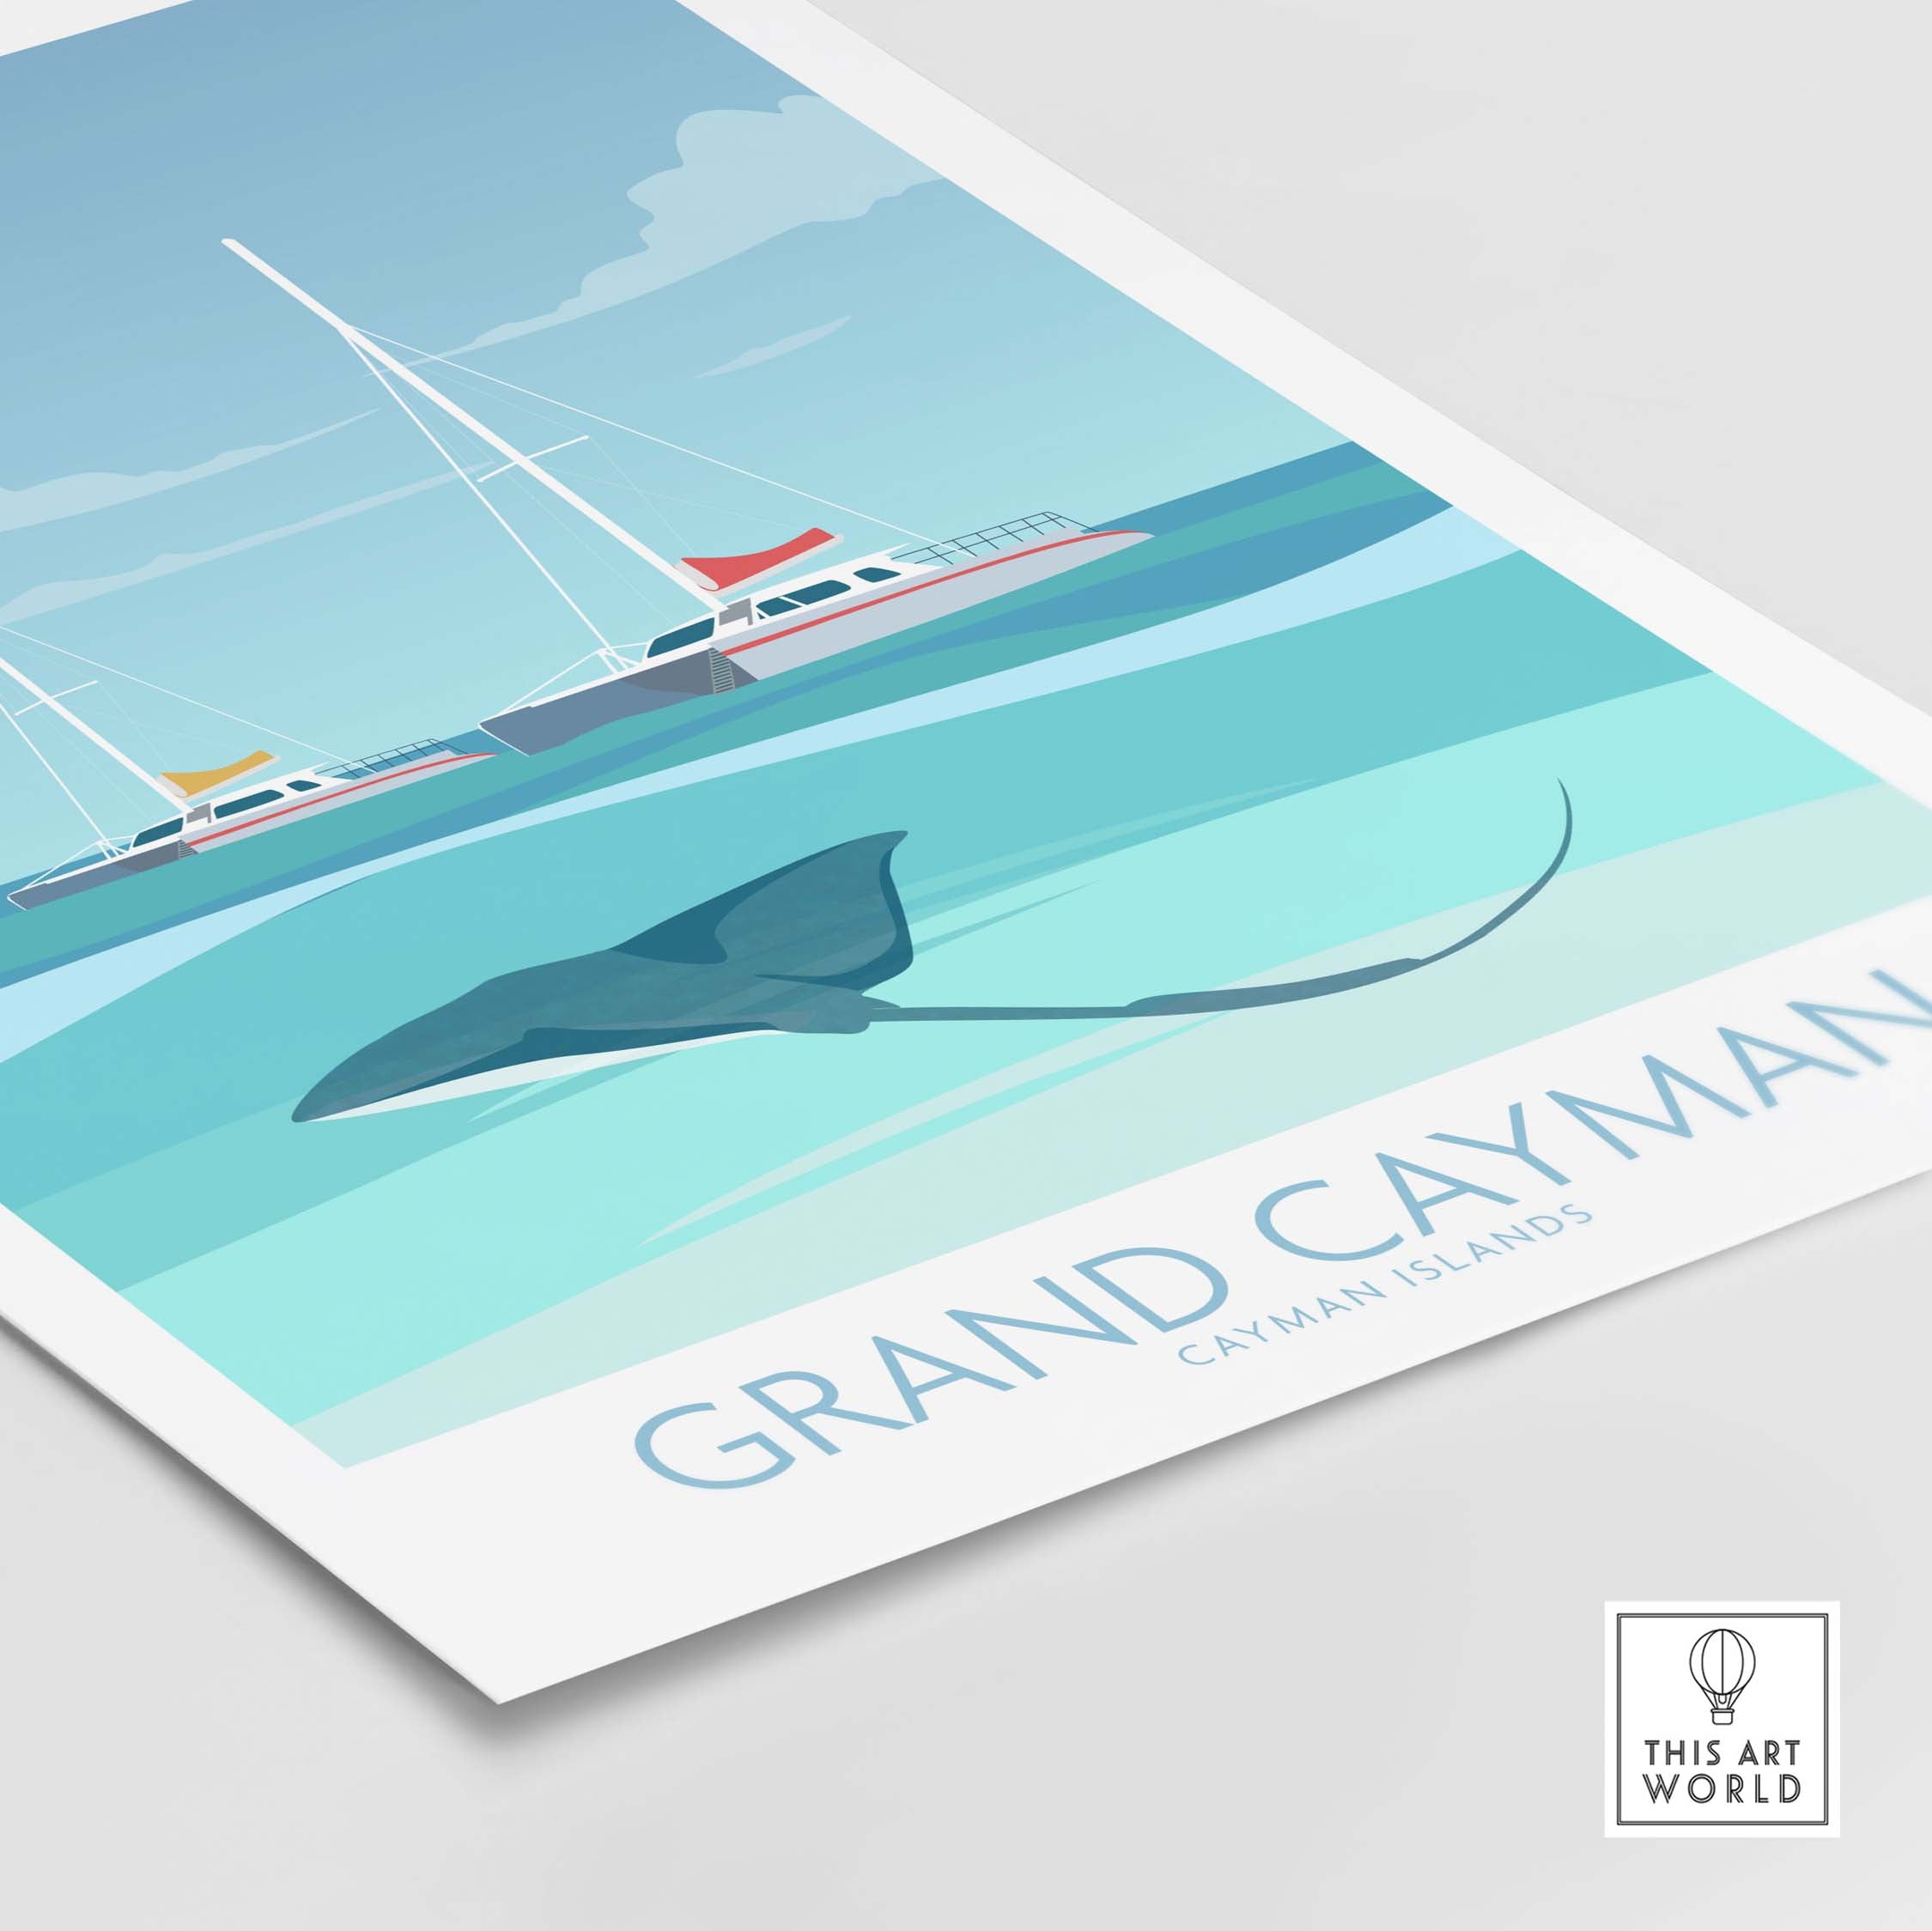 grand cayman art print poster